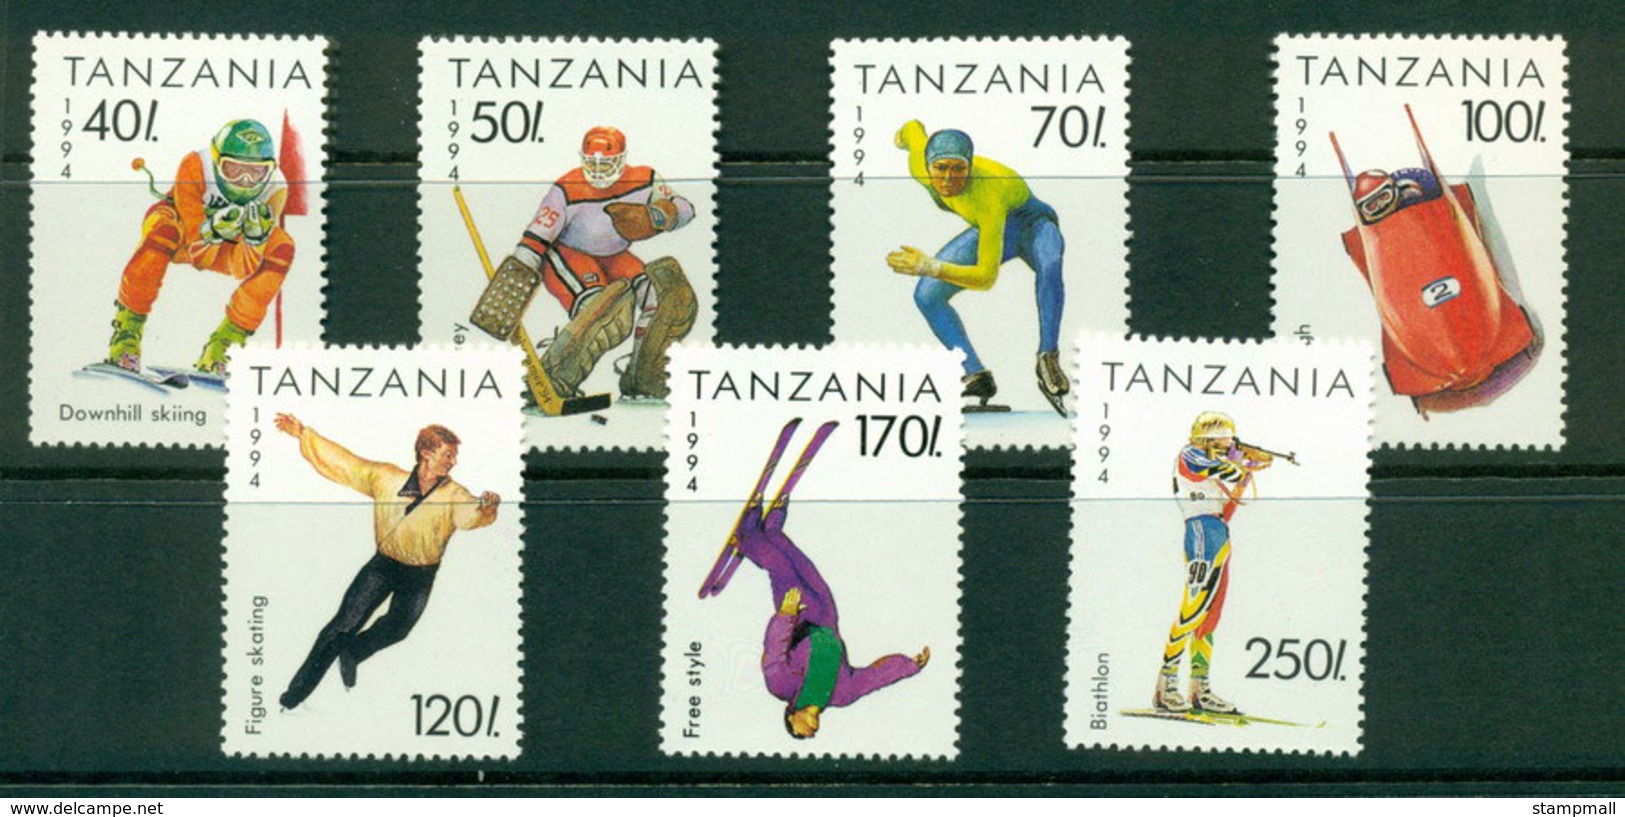 Tanzania 1994 Winter Sports MUH Lot21330 - Swaziland (1968-...)